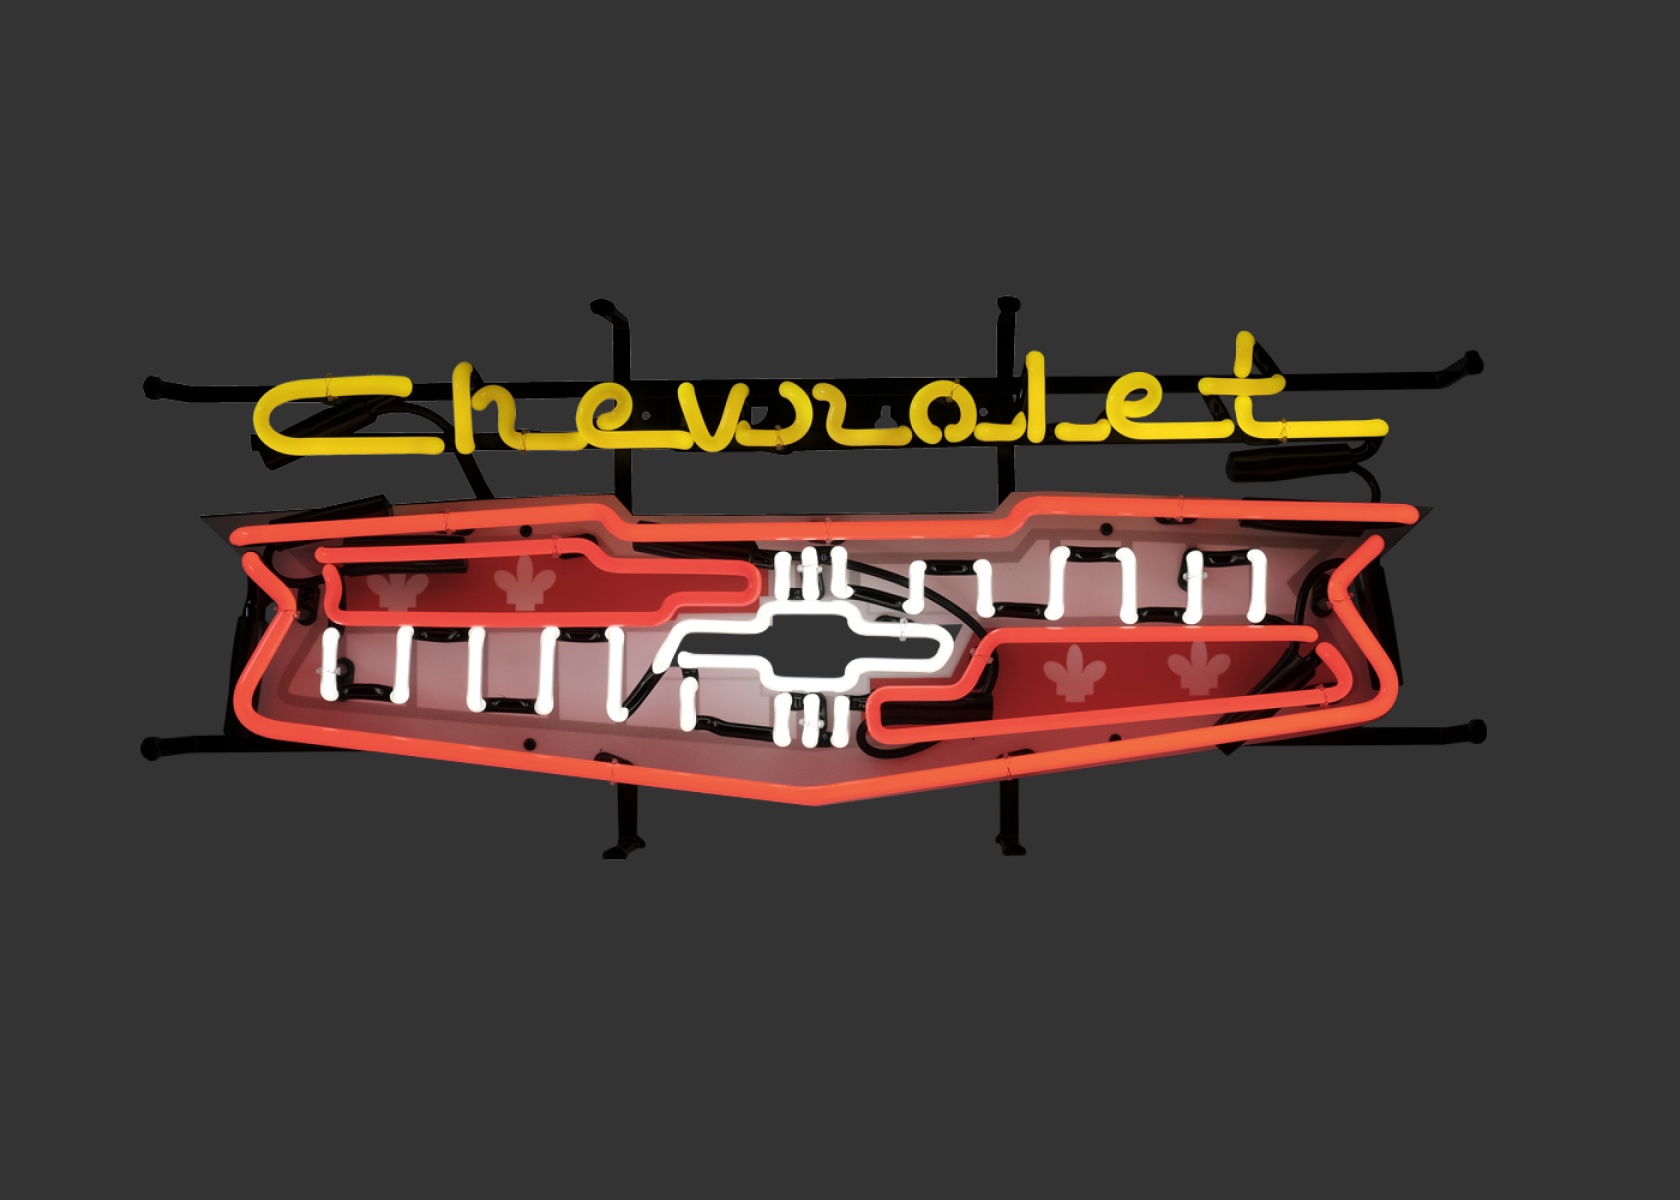 Chevy neon sign - Auto - GM